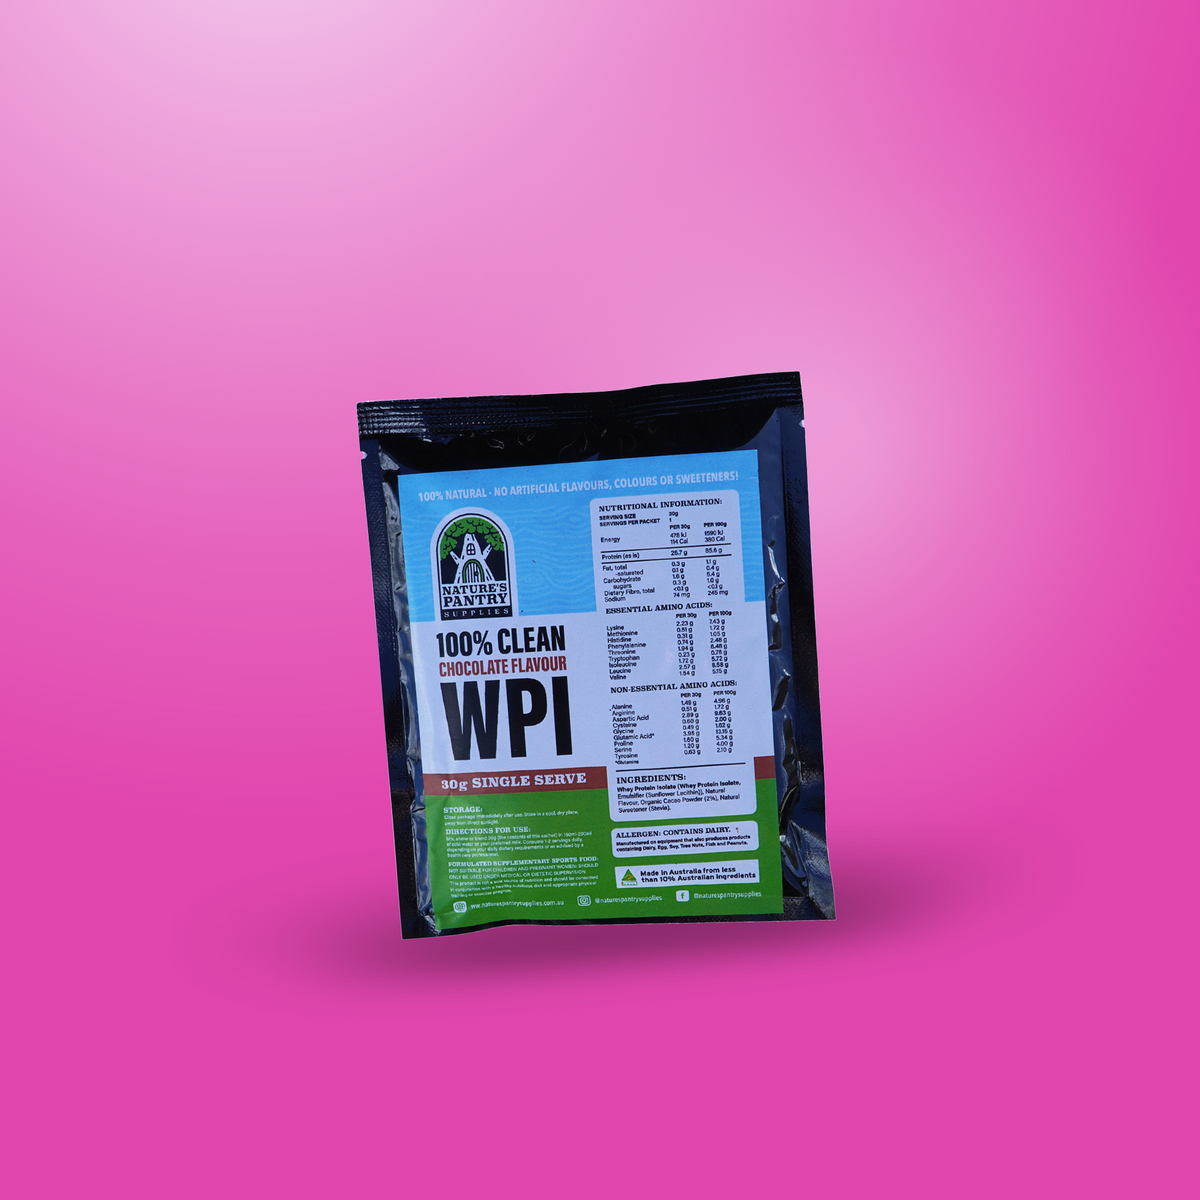 Chocolate Whey Protein Isolate (WPI)